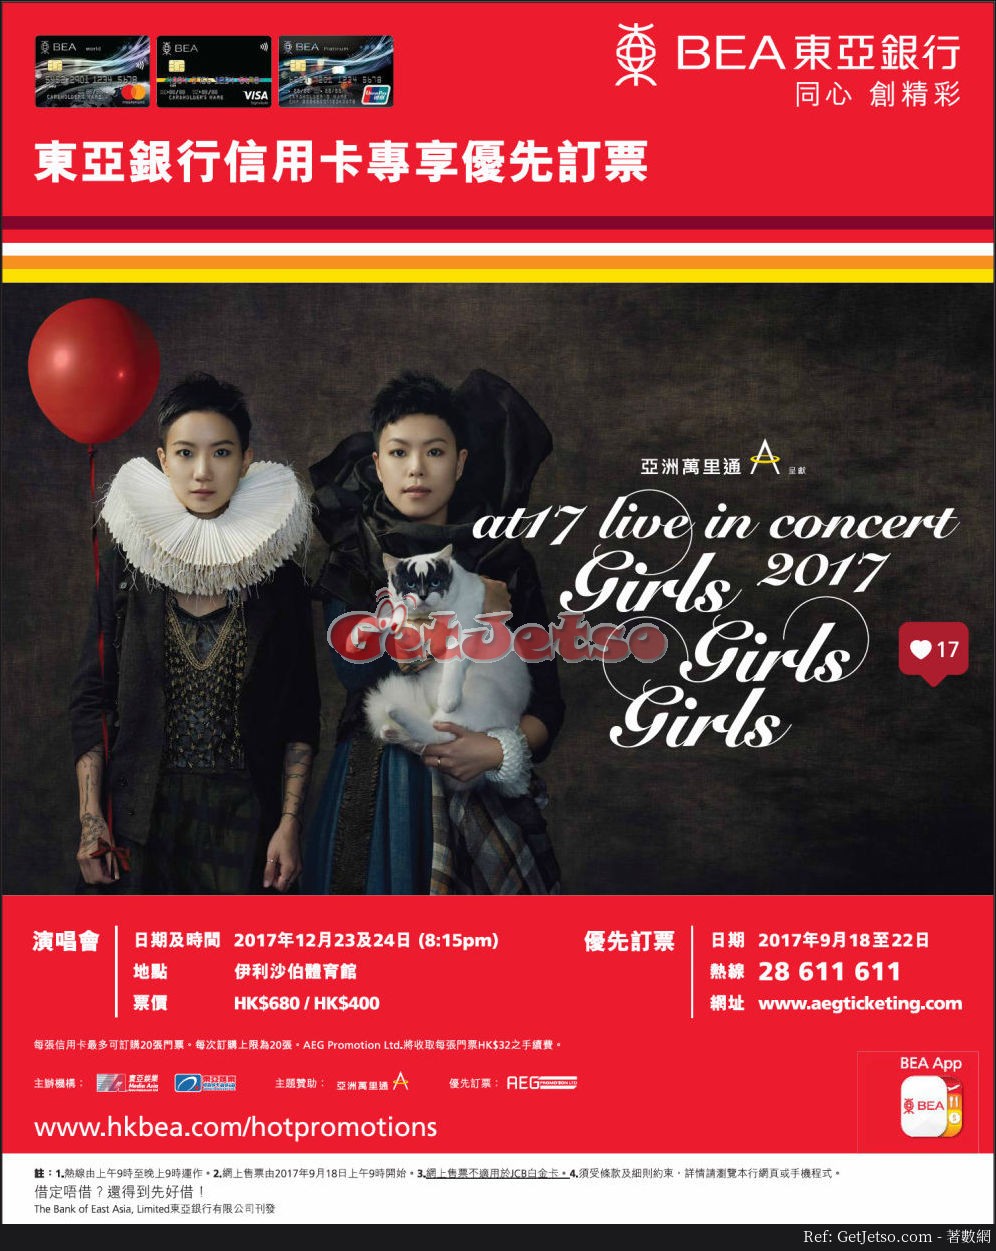 Girls Girls Girls at17 live in concert 2017 優先訂票優惠@東亞信用卡(17年9月18-22日)圖片1